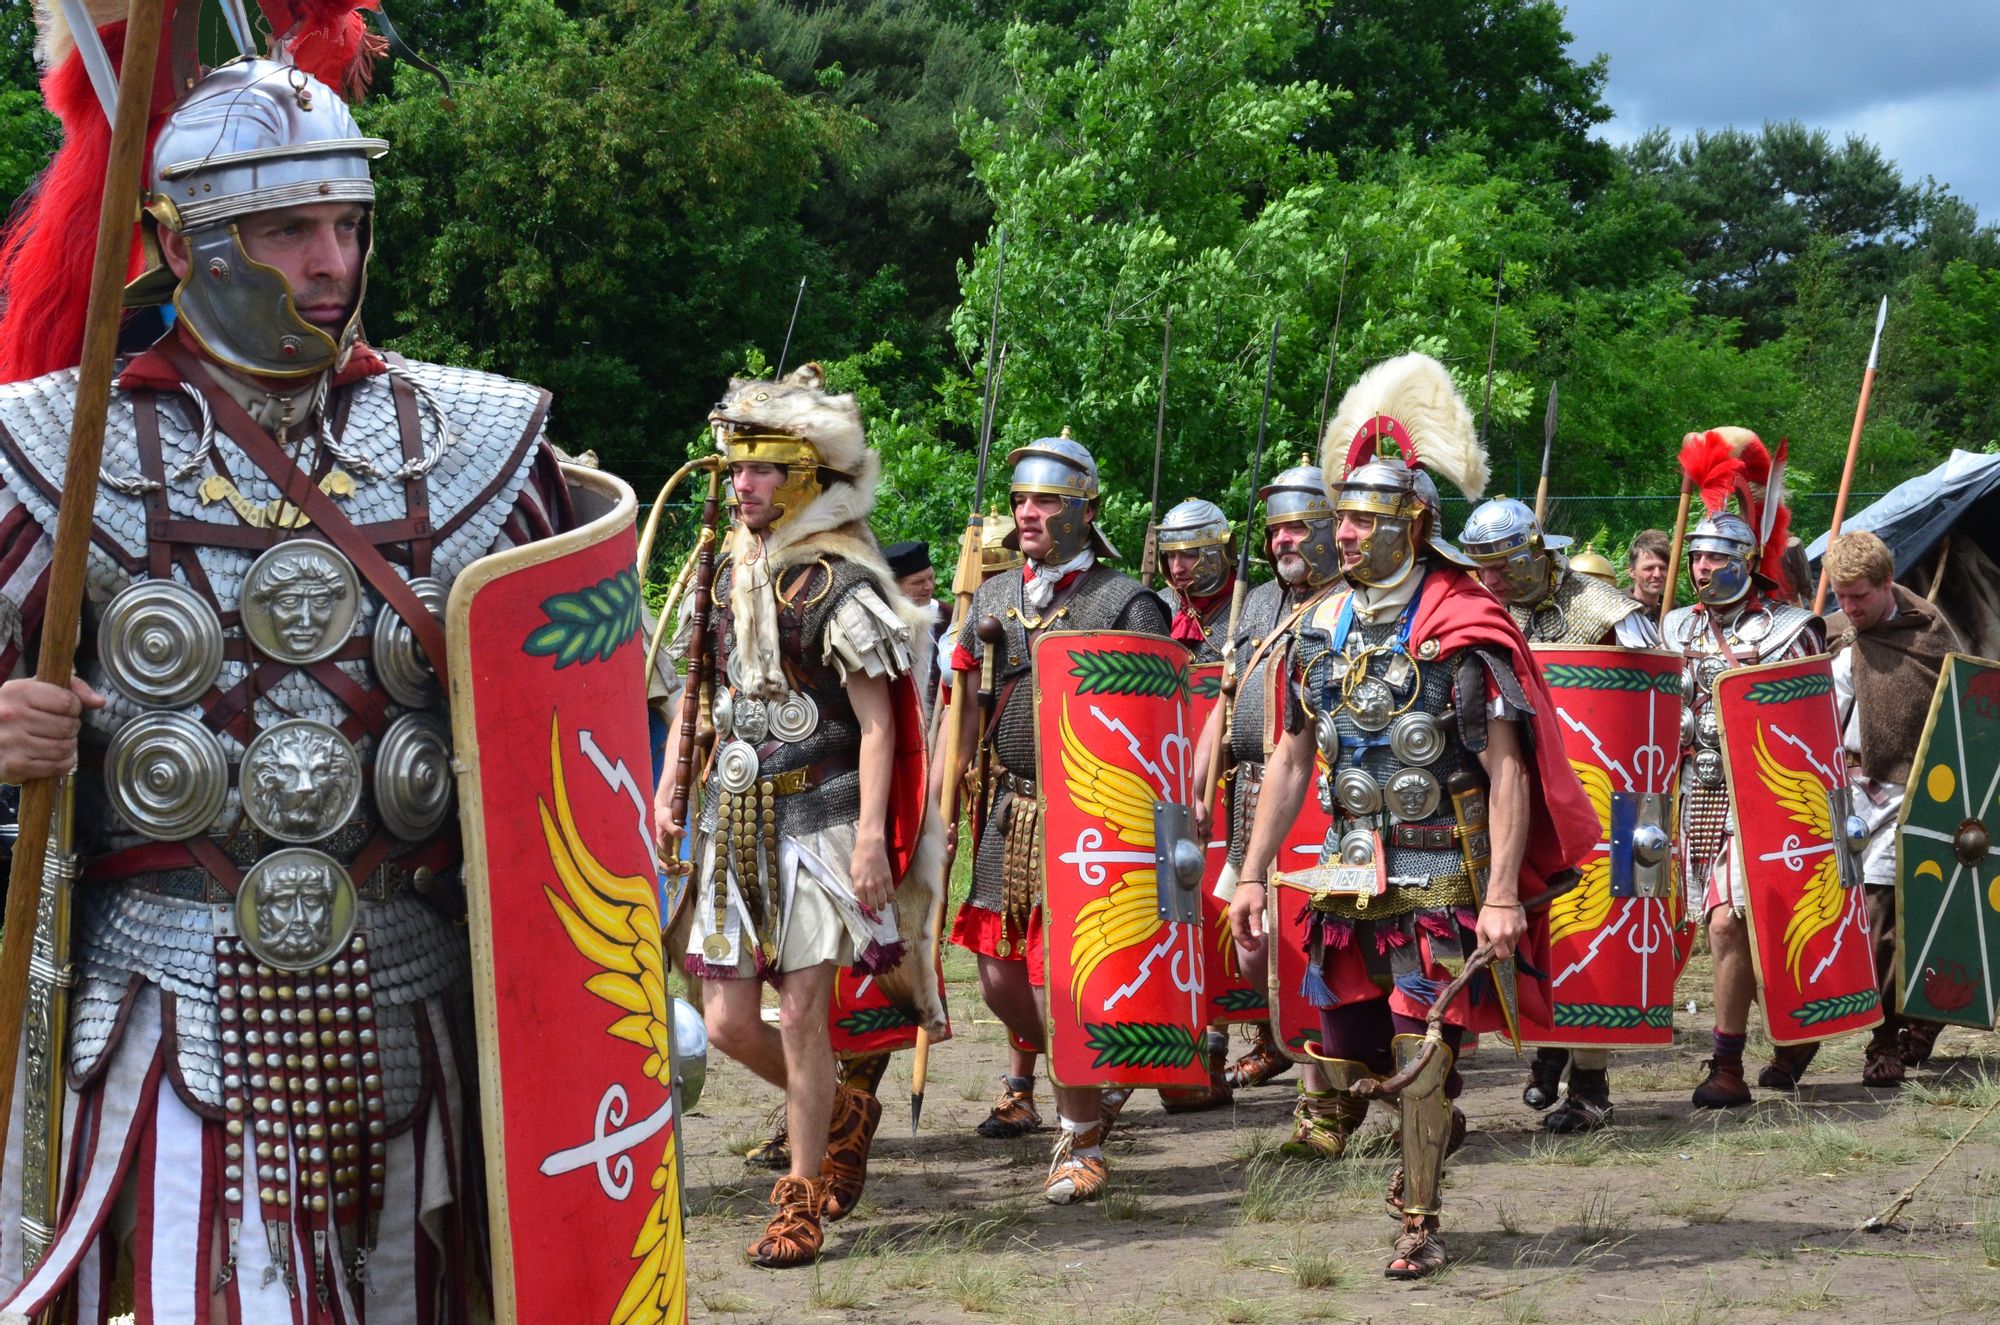 Древний Рим римские Легионы